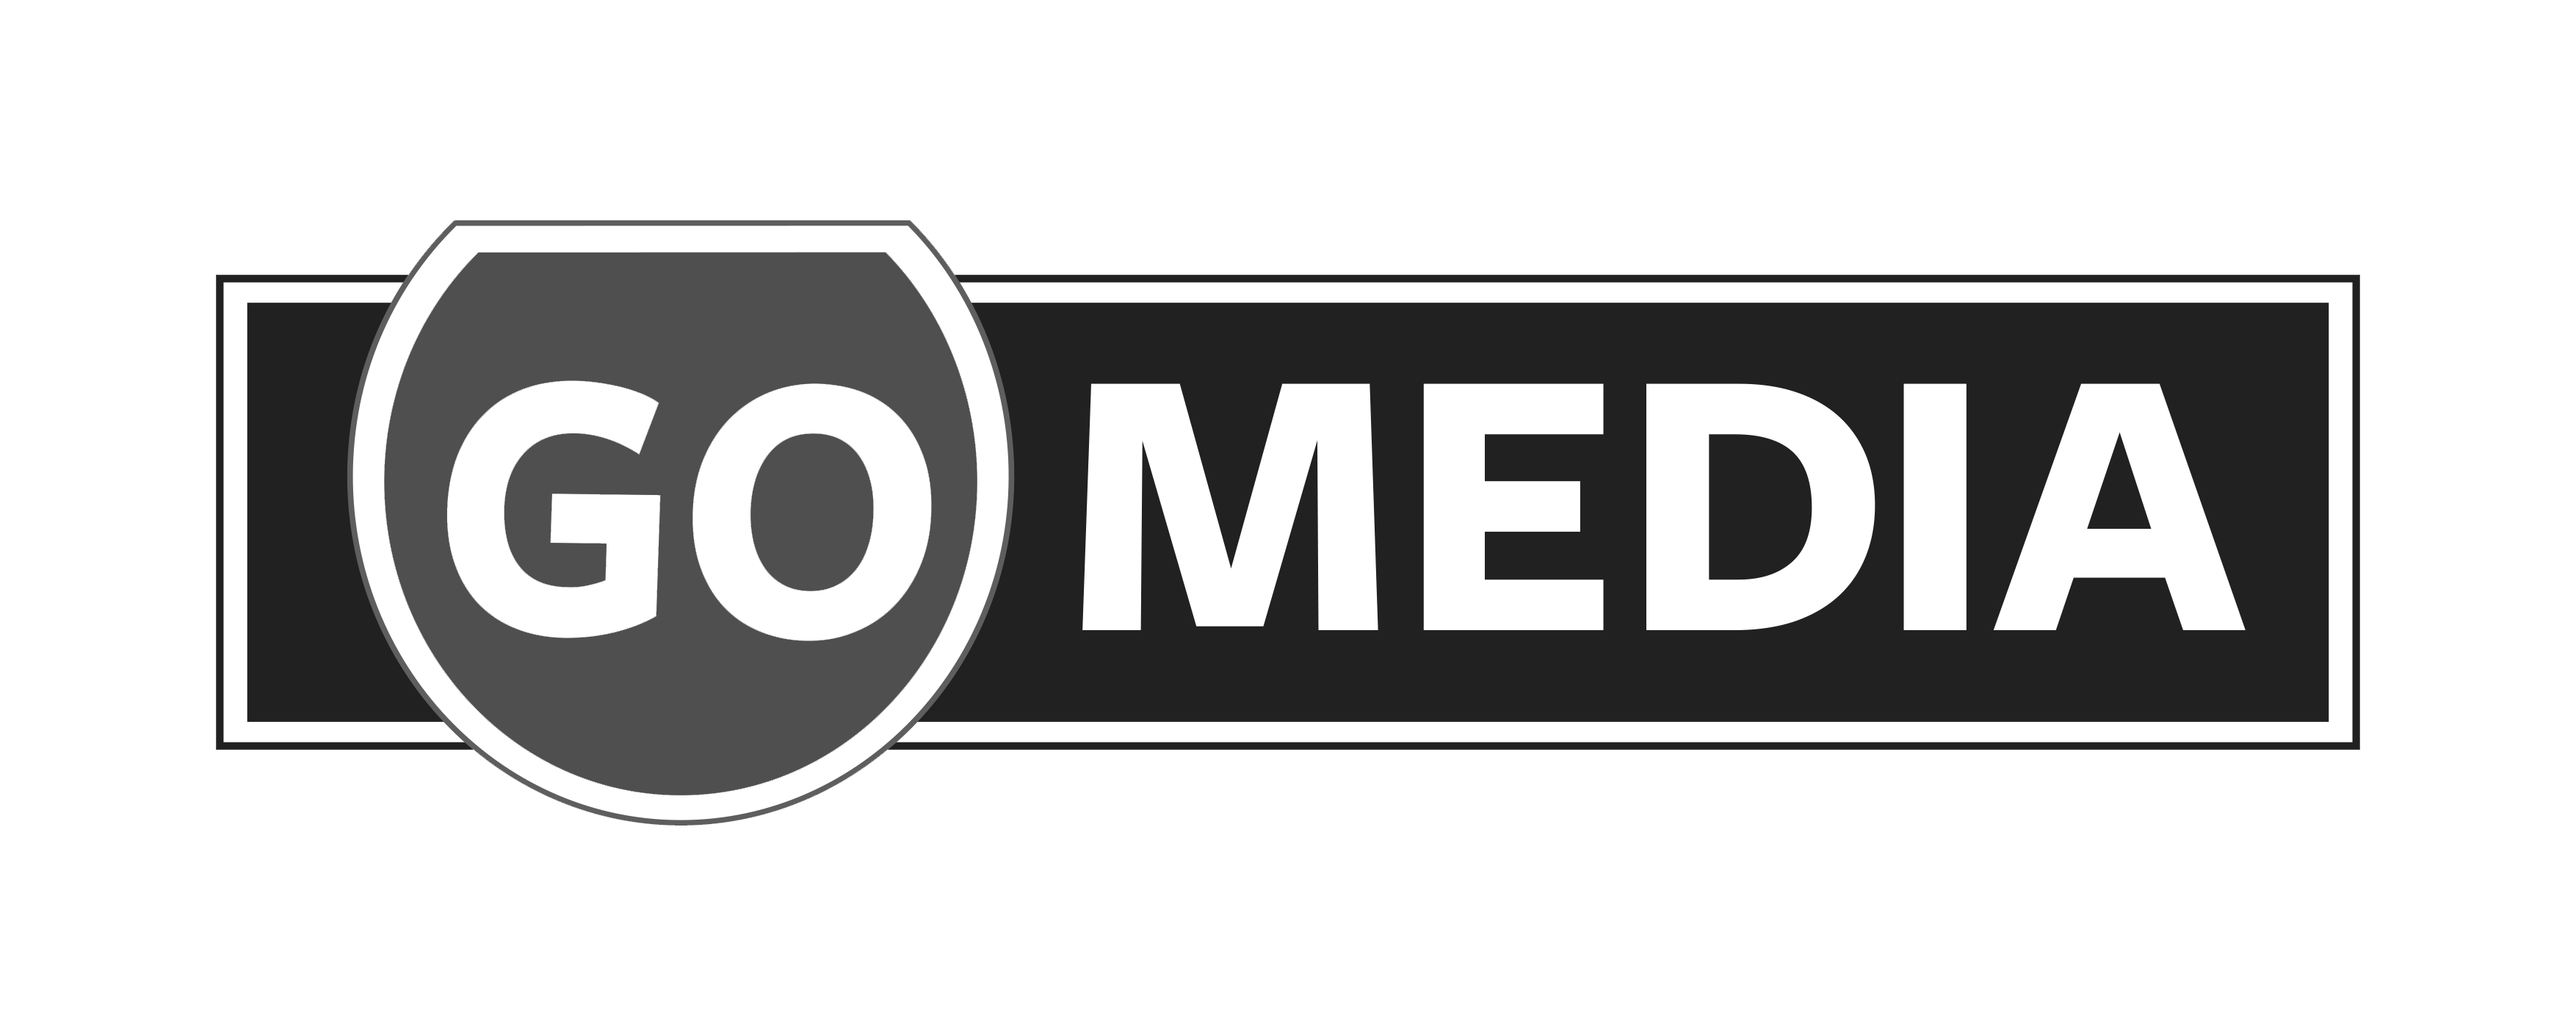 Go media